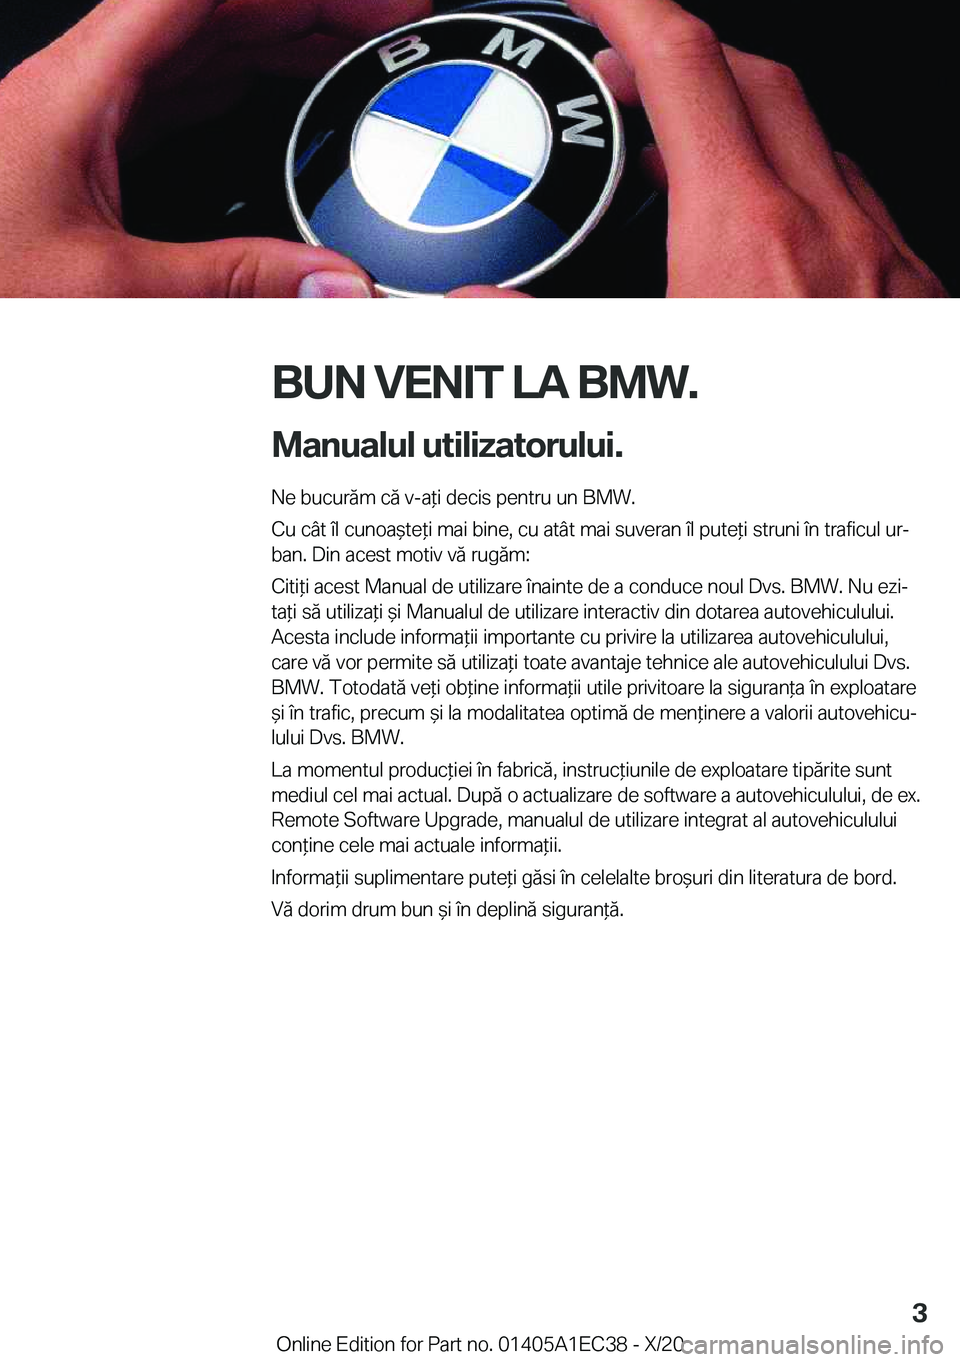 BMW 8 SERIES GRAN COUPE 2021  Ghiduri De Utilizare (in Romanian) �B�U�N��V�E�N�I�T��L�A��B�M�W�.�M�a�n�u�a�l�u�l��u�t�i�l�i�z�a�t�o�r�u�l�u�i�.
�N�e��b�u�c�u�r�ă�m��c�ă��v�-�a*�i��d�e�c�i�s��p�e�n�t�r�u��u�n��B�M�W�.
�C�u��c�